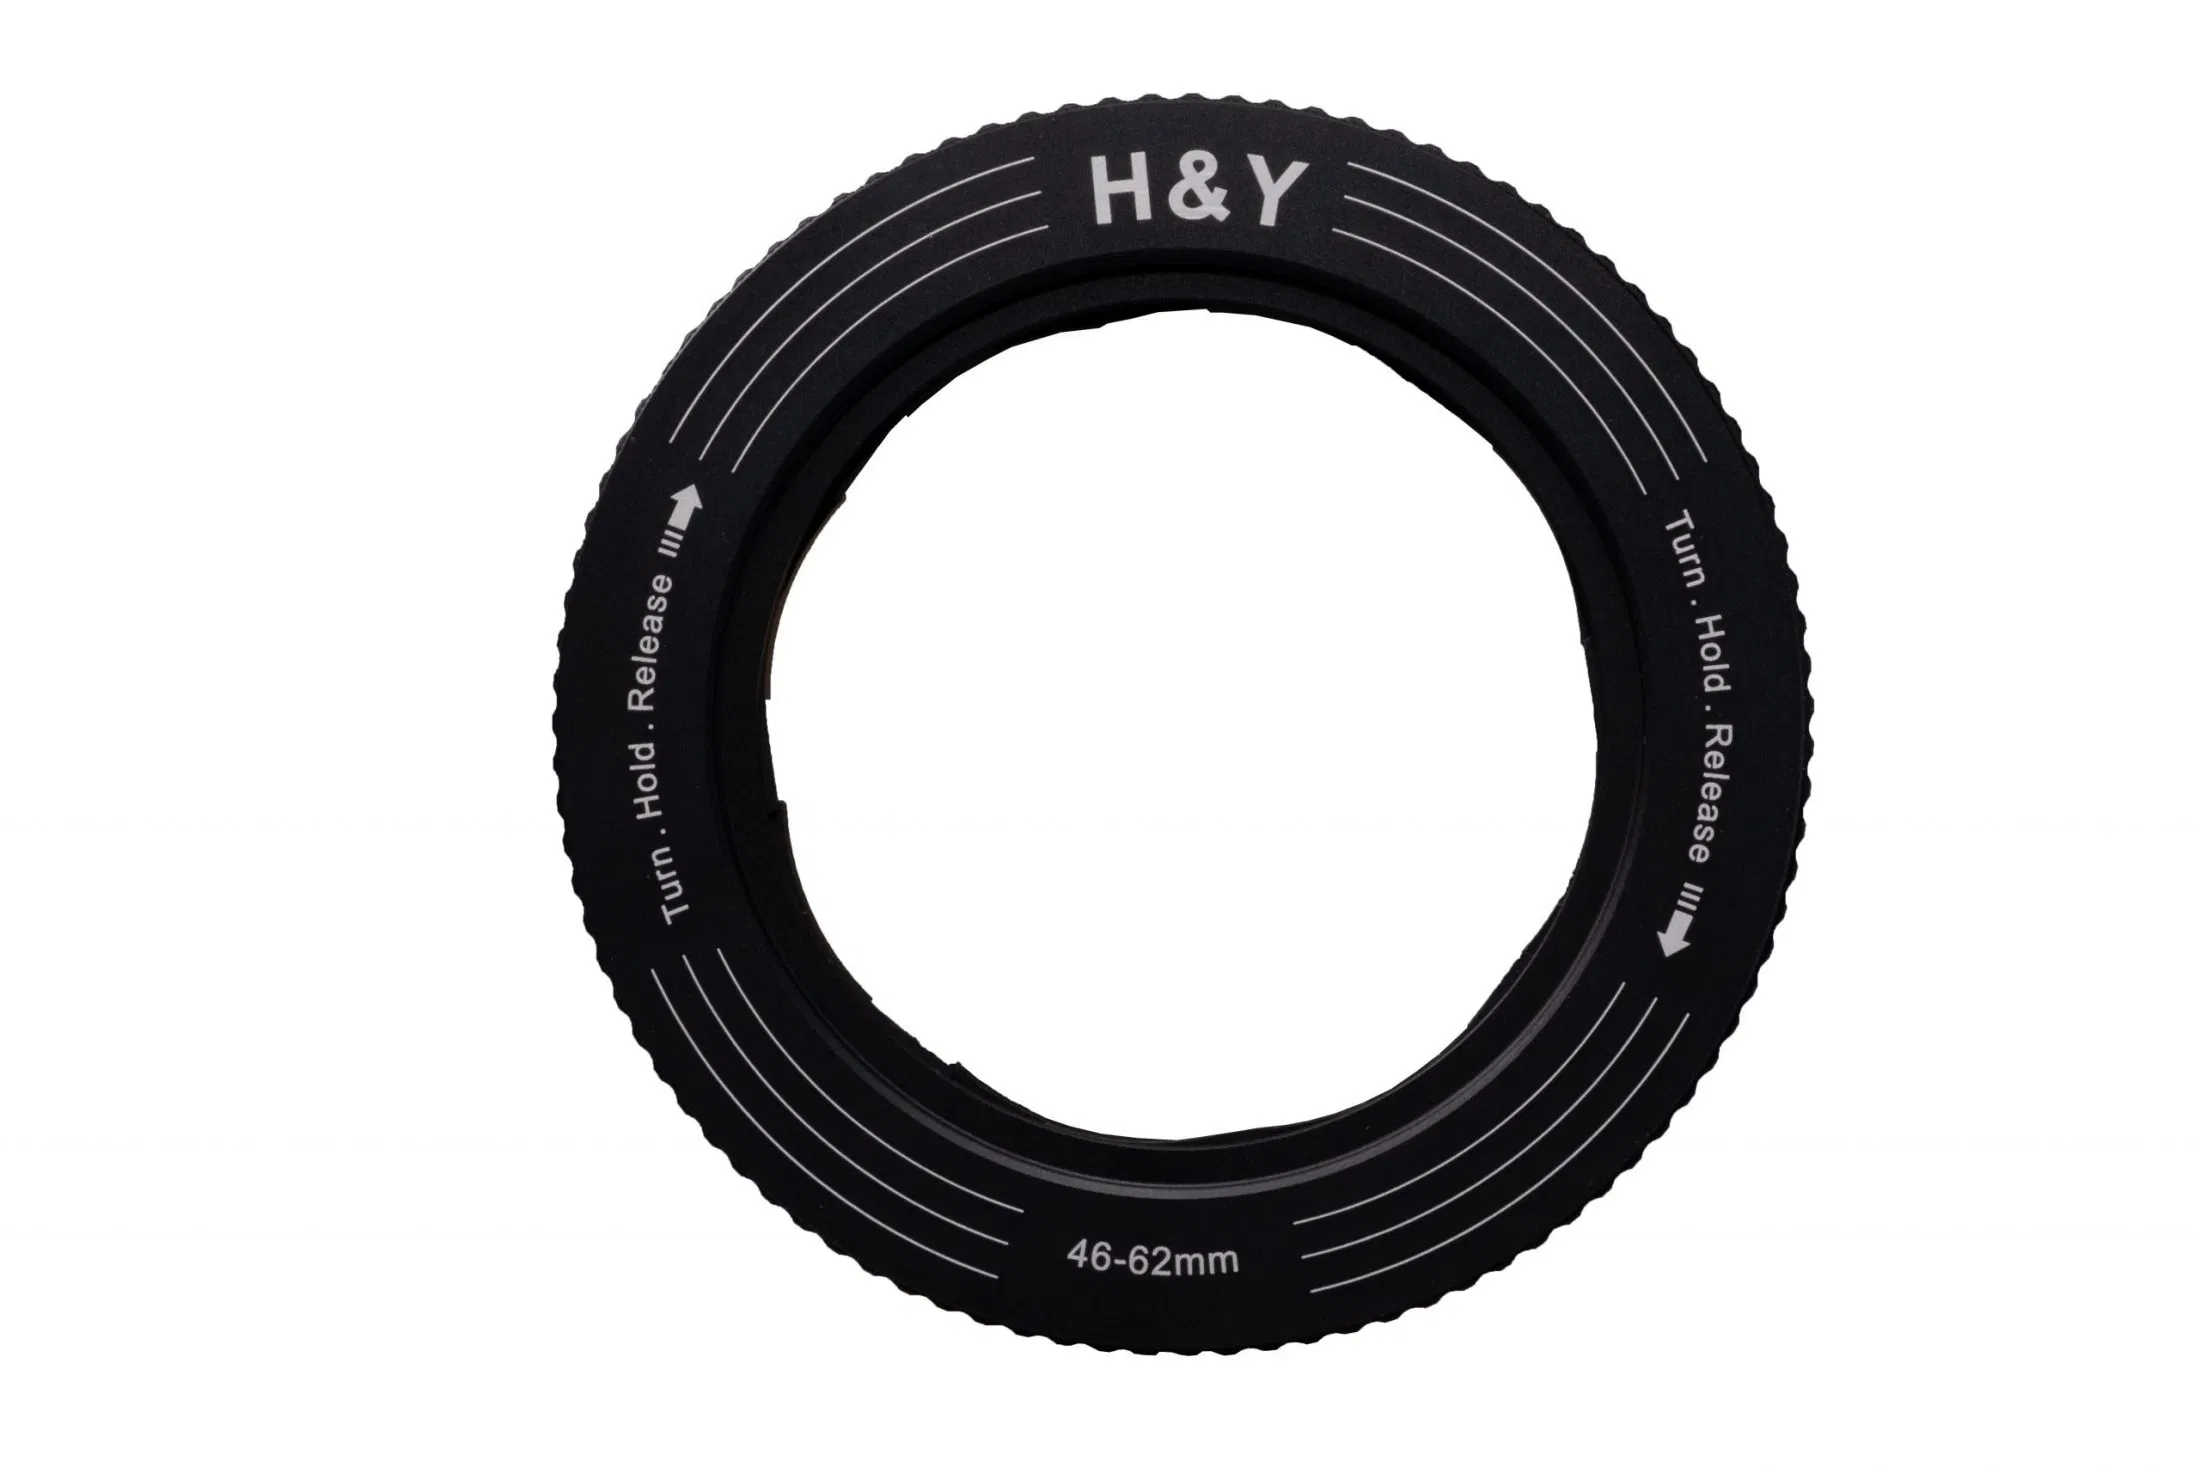 H&Y Filtri Revoring adattatore multiformato 46-62mm per filtri d